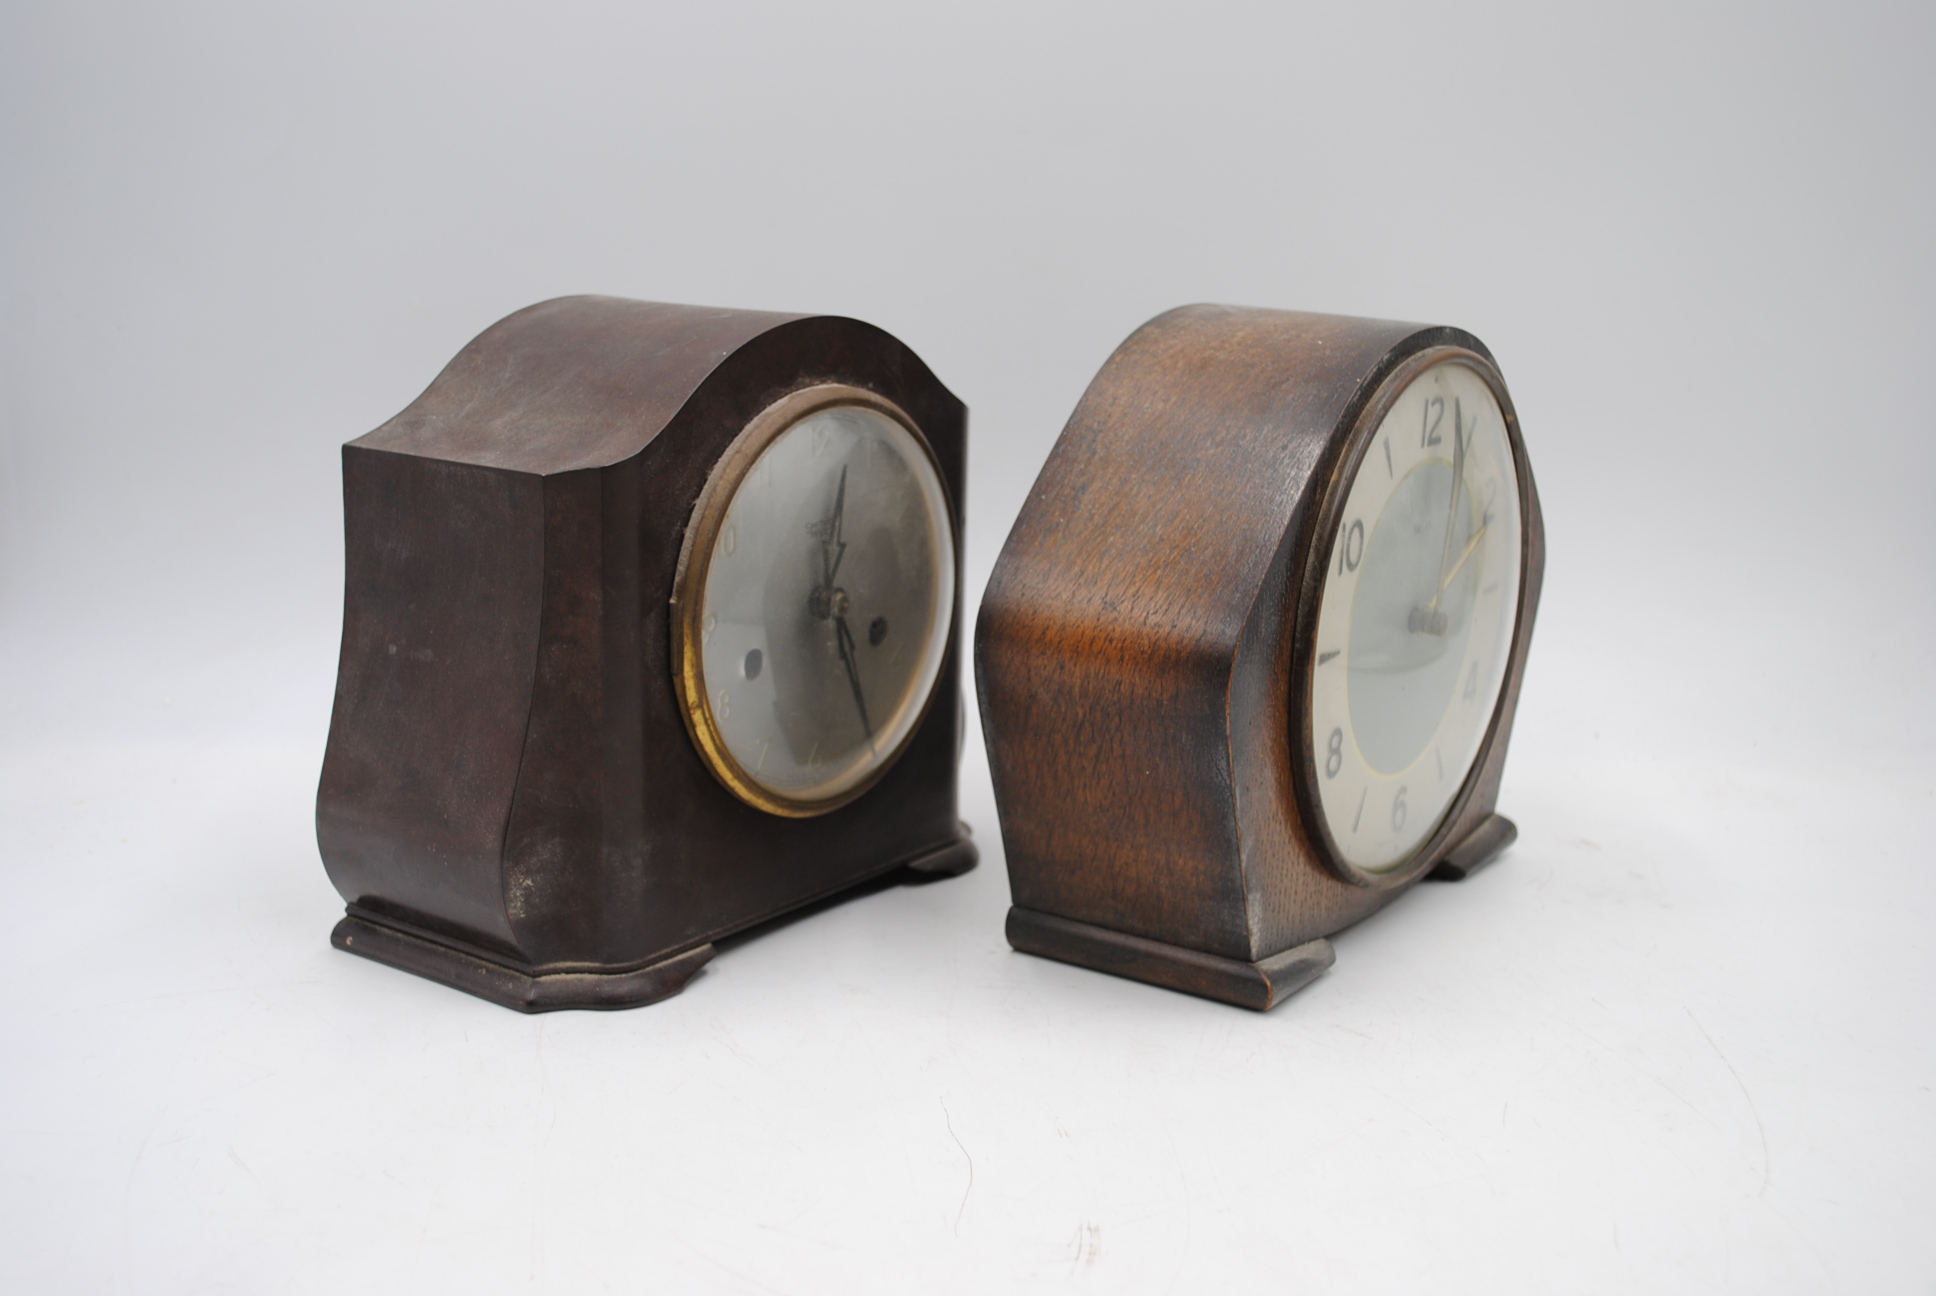 A vintage Smiths bakelite mantel clock along with a Smiths oak mantel clock - Image 3 of 9